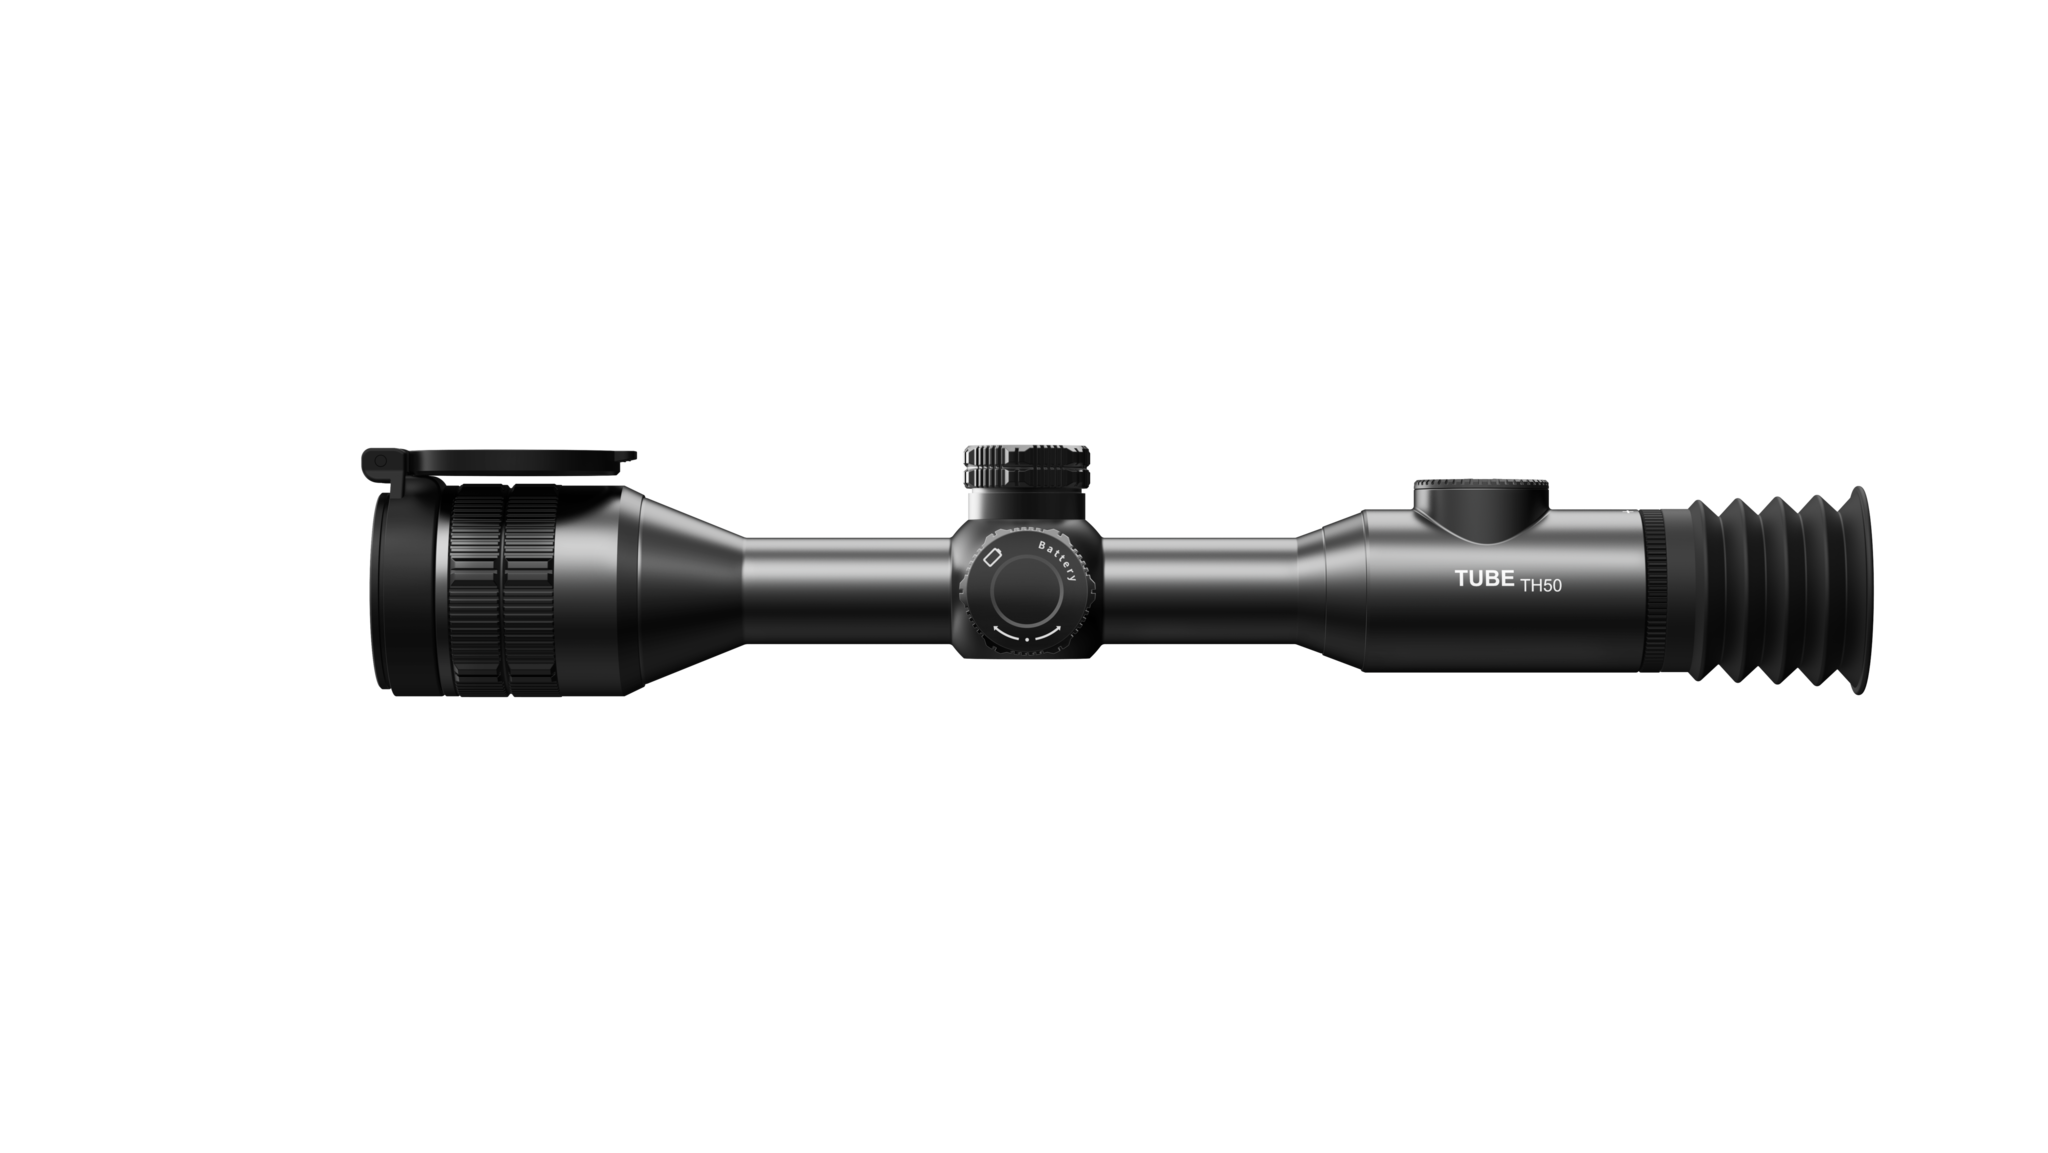 InfiRay Thermal Imaging Riflescope Tube TH50